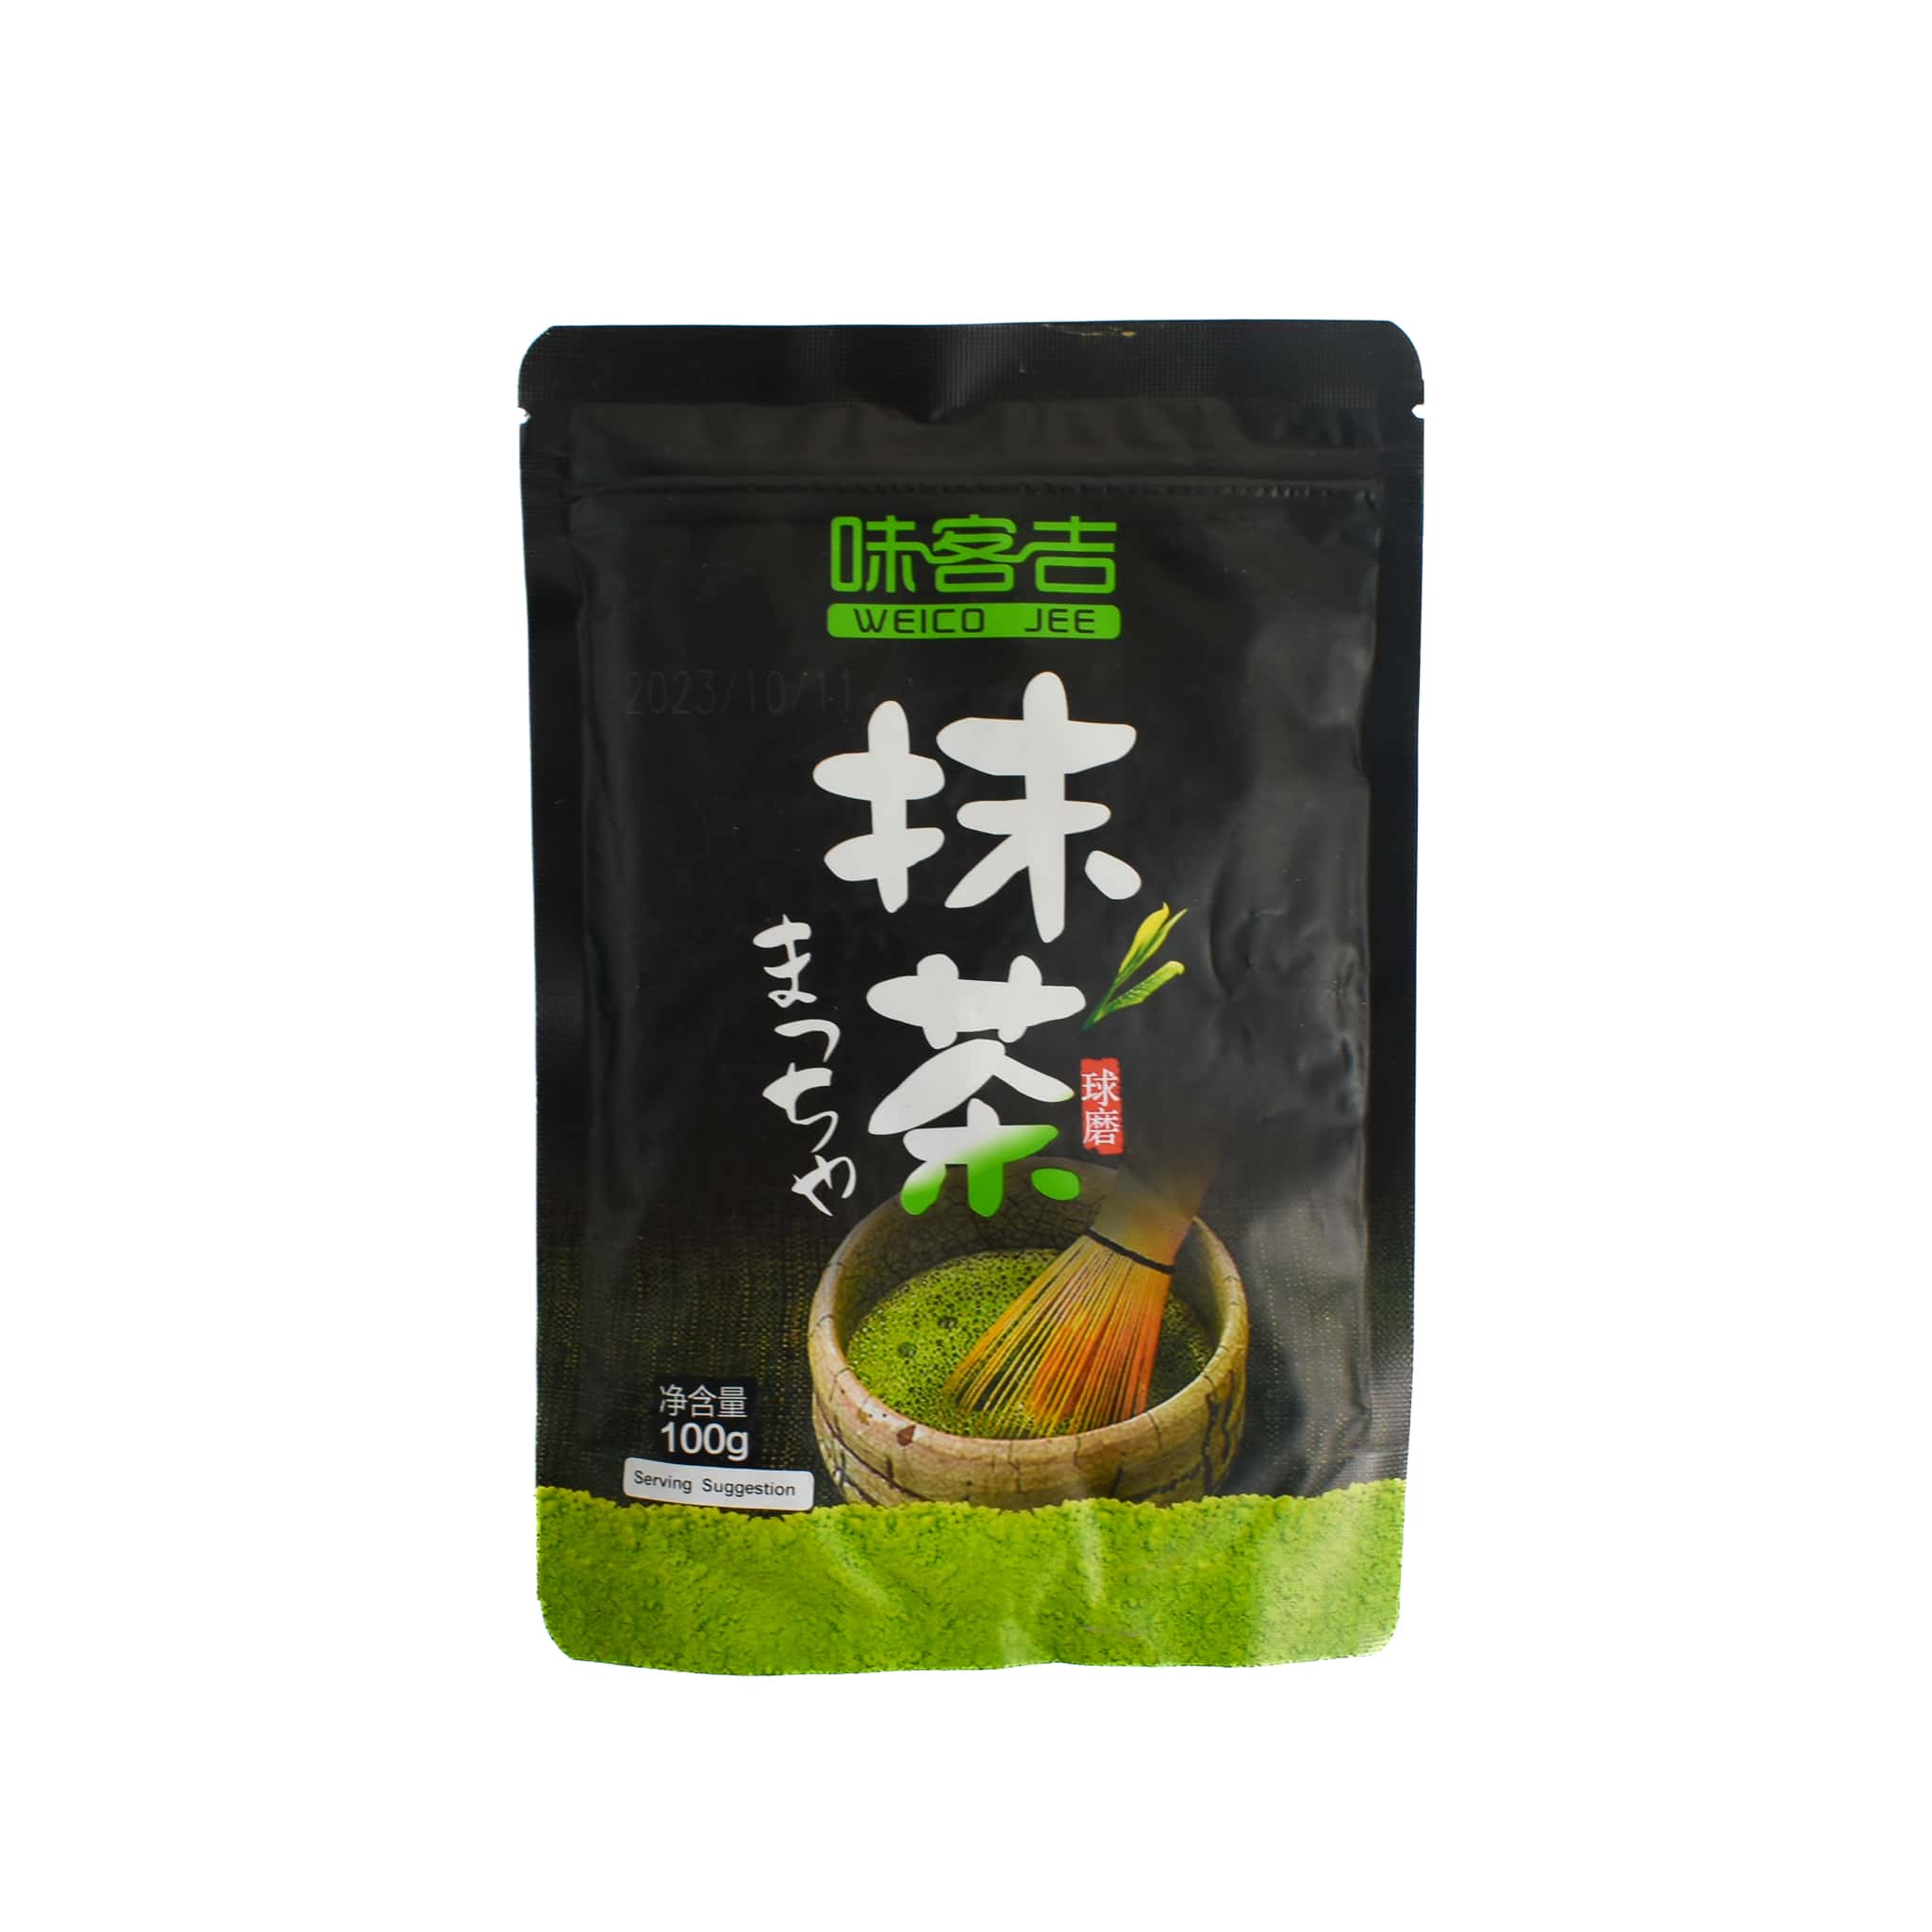 Weico Jee Matcha Green Tea Powder, 100g